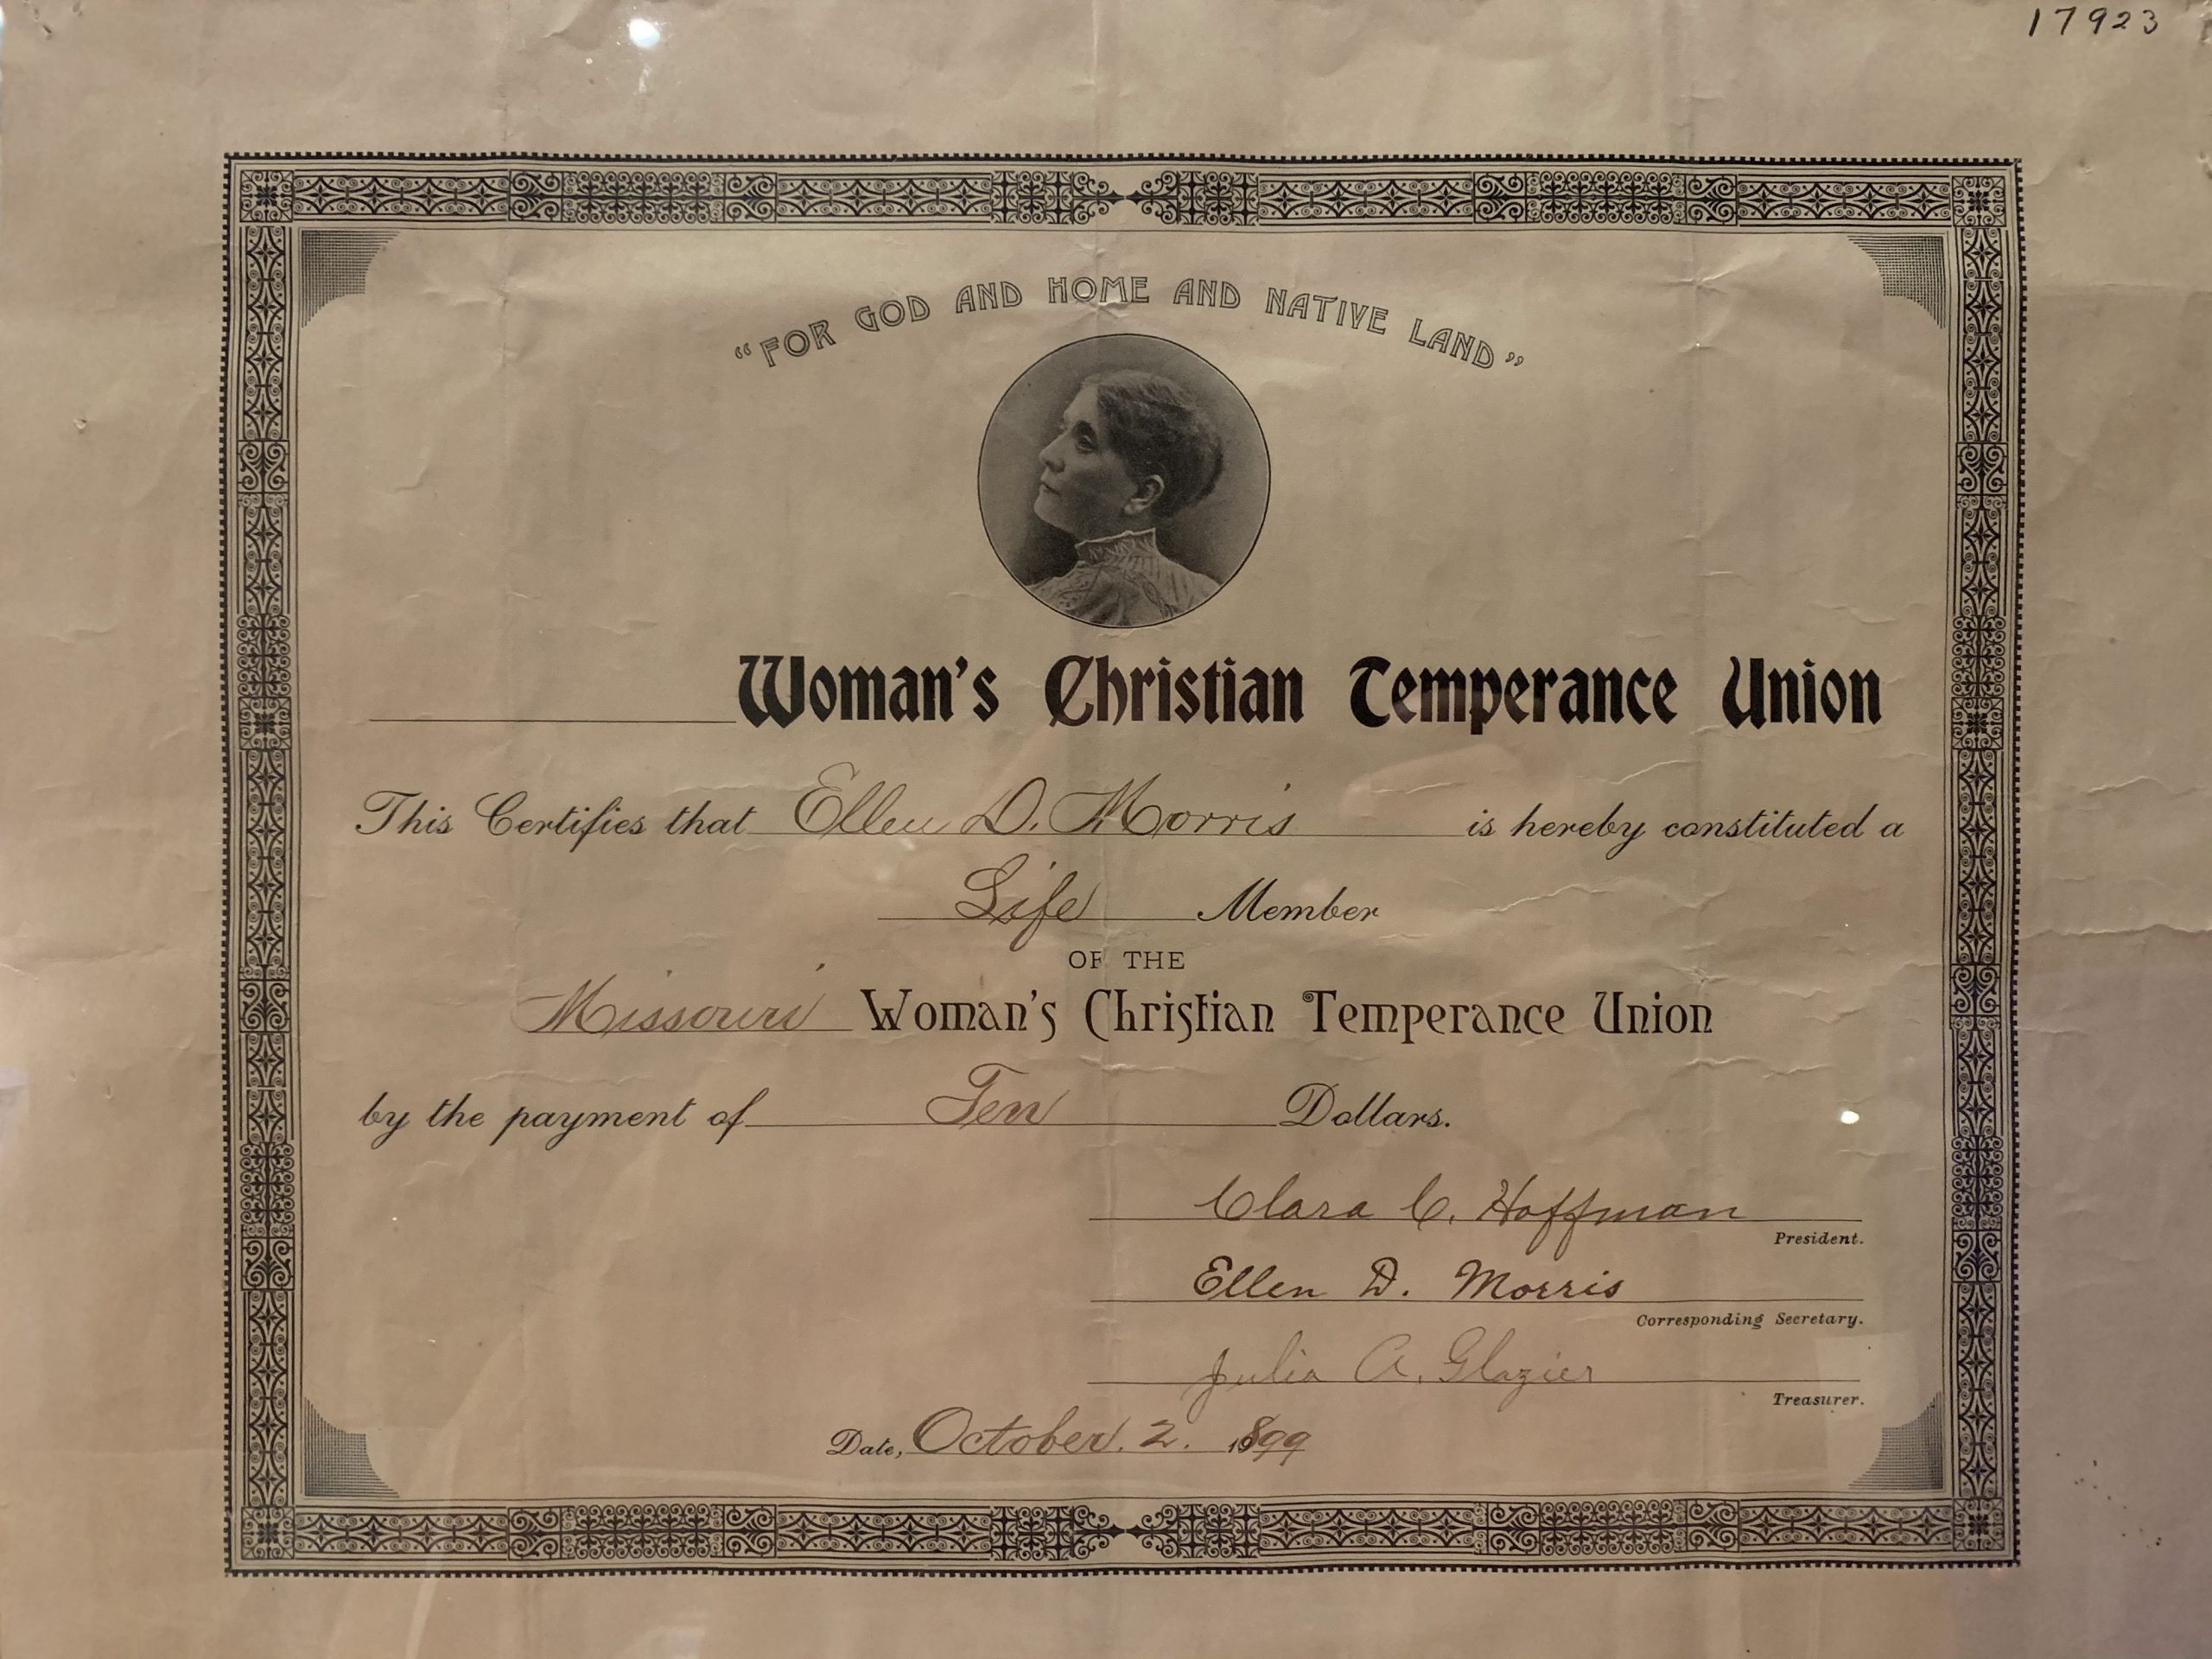 Membership Certificate, 1899. Certifies Elleu Morris as a life member of the Women’s Christian Temperance Union of Missouri.